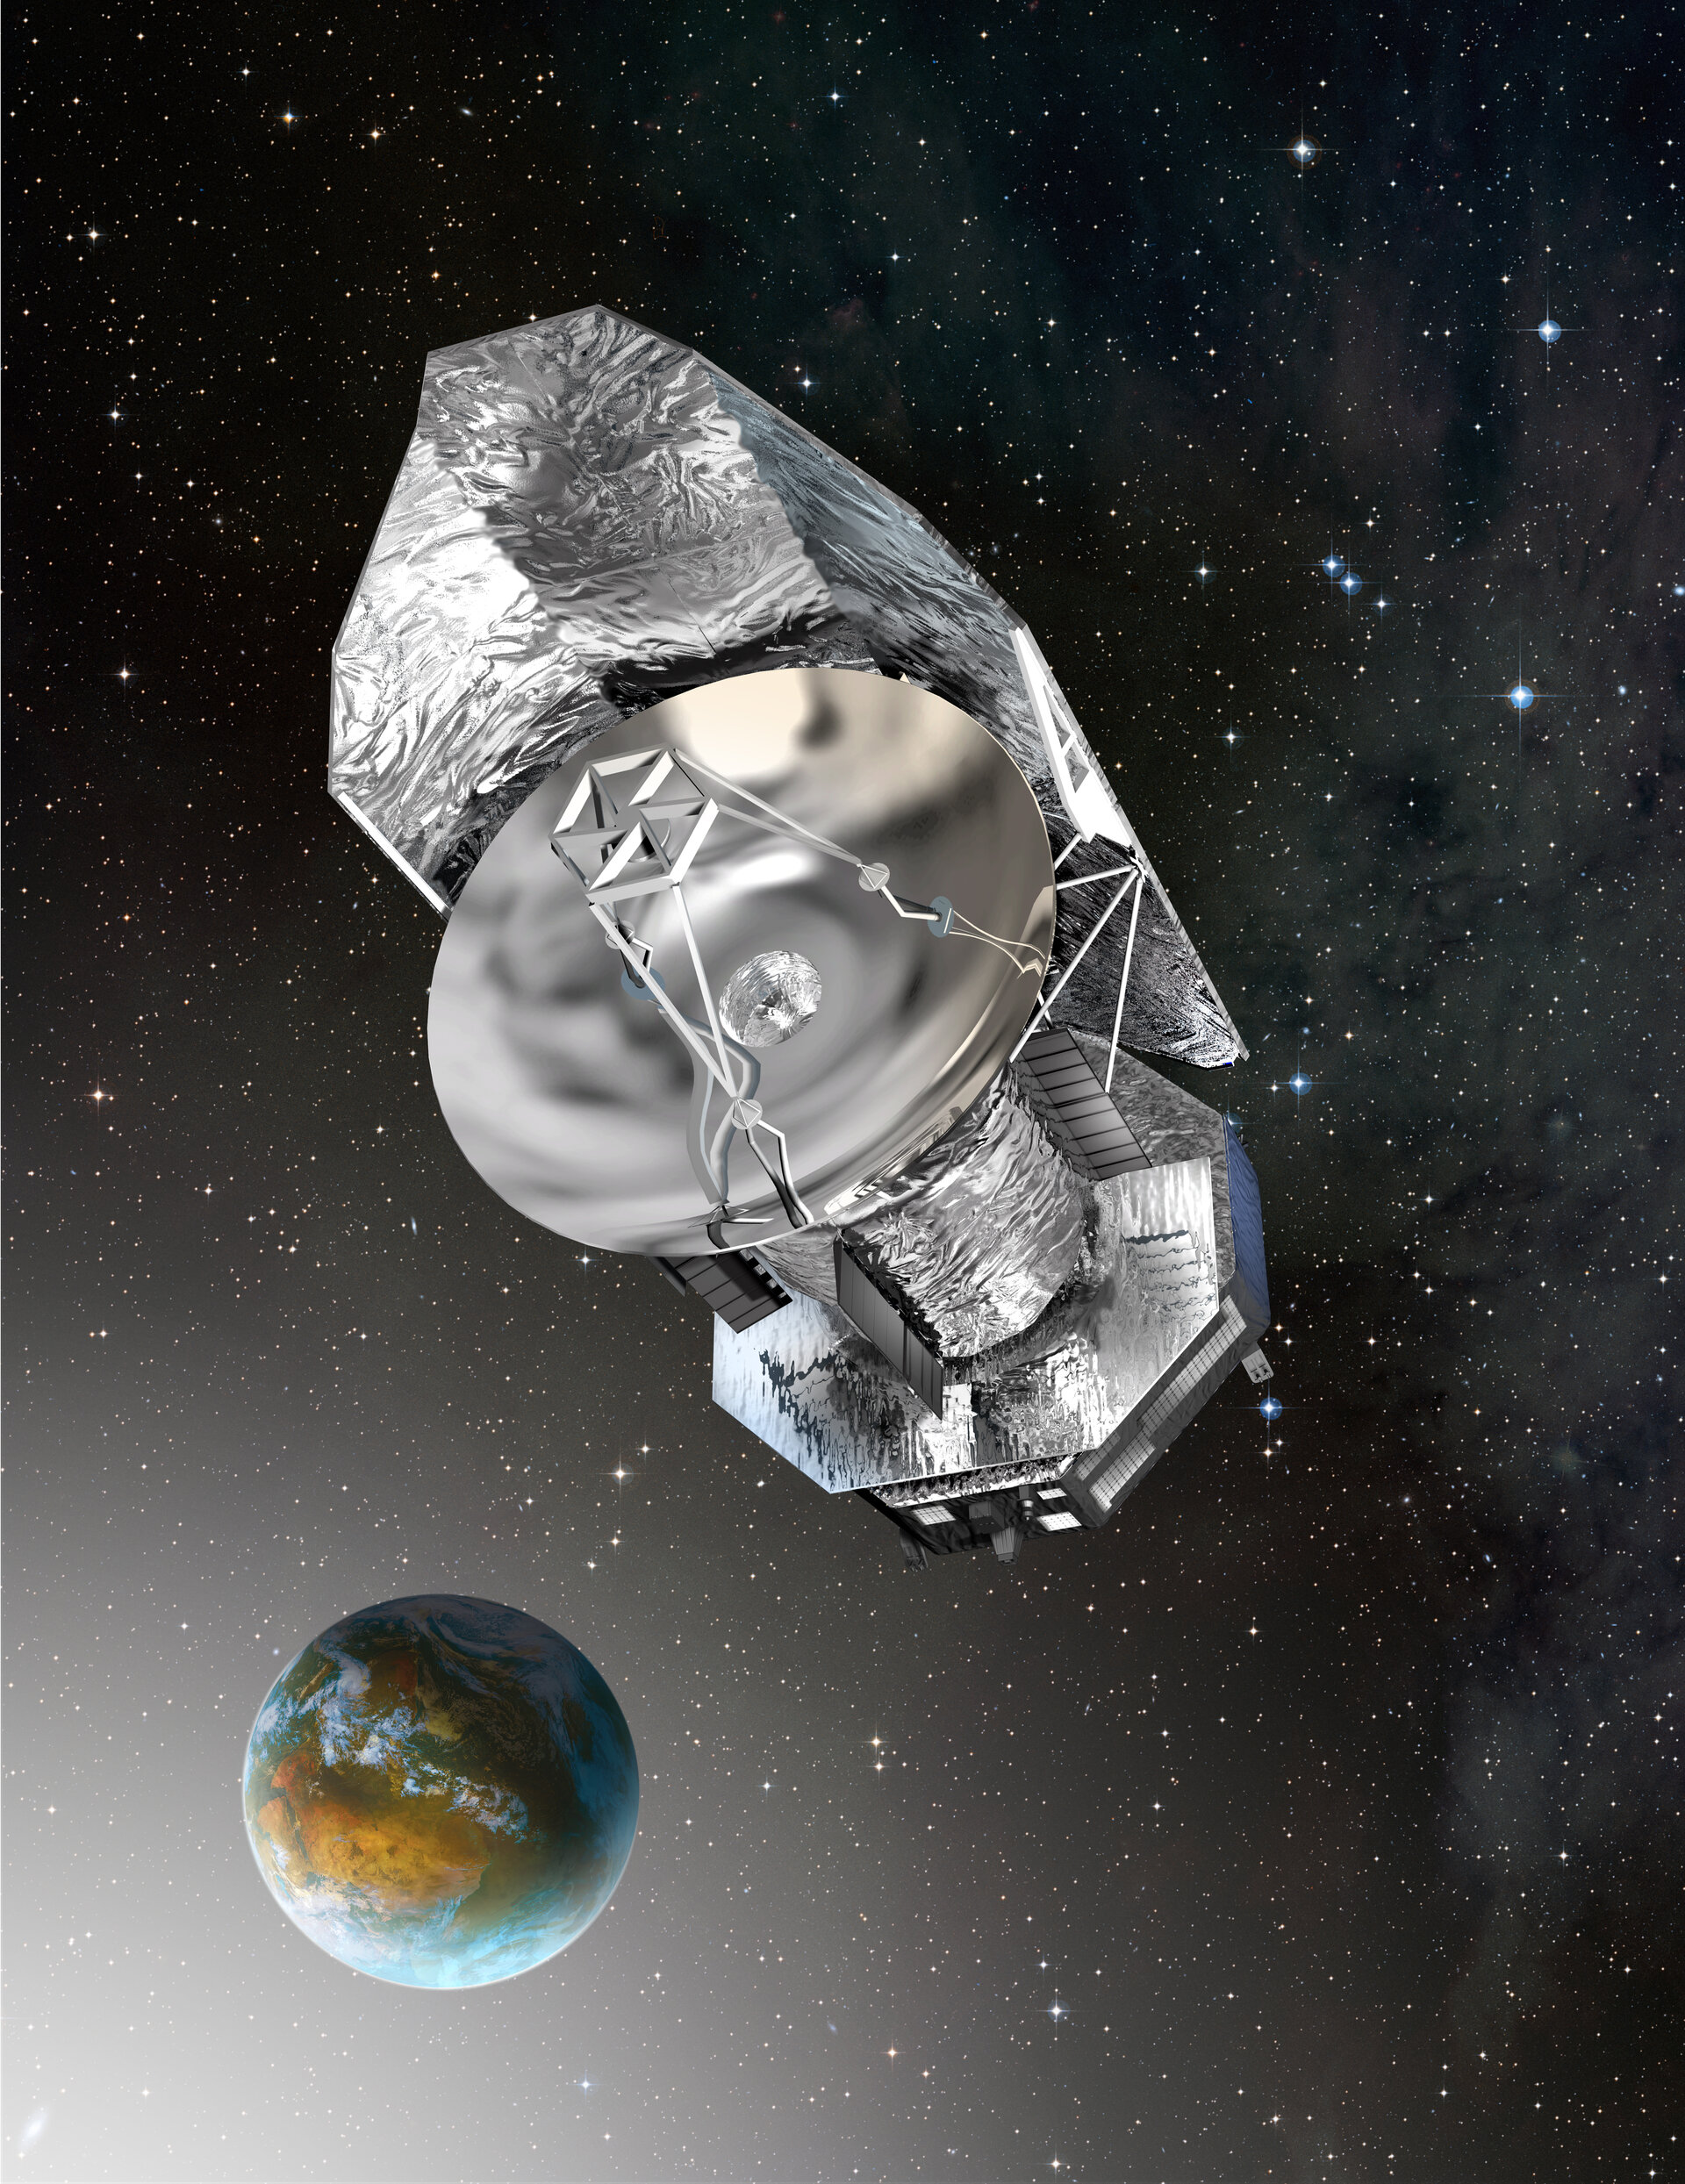 Artist concept of the Herschel spacecraft